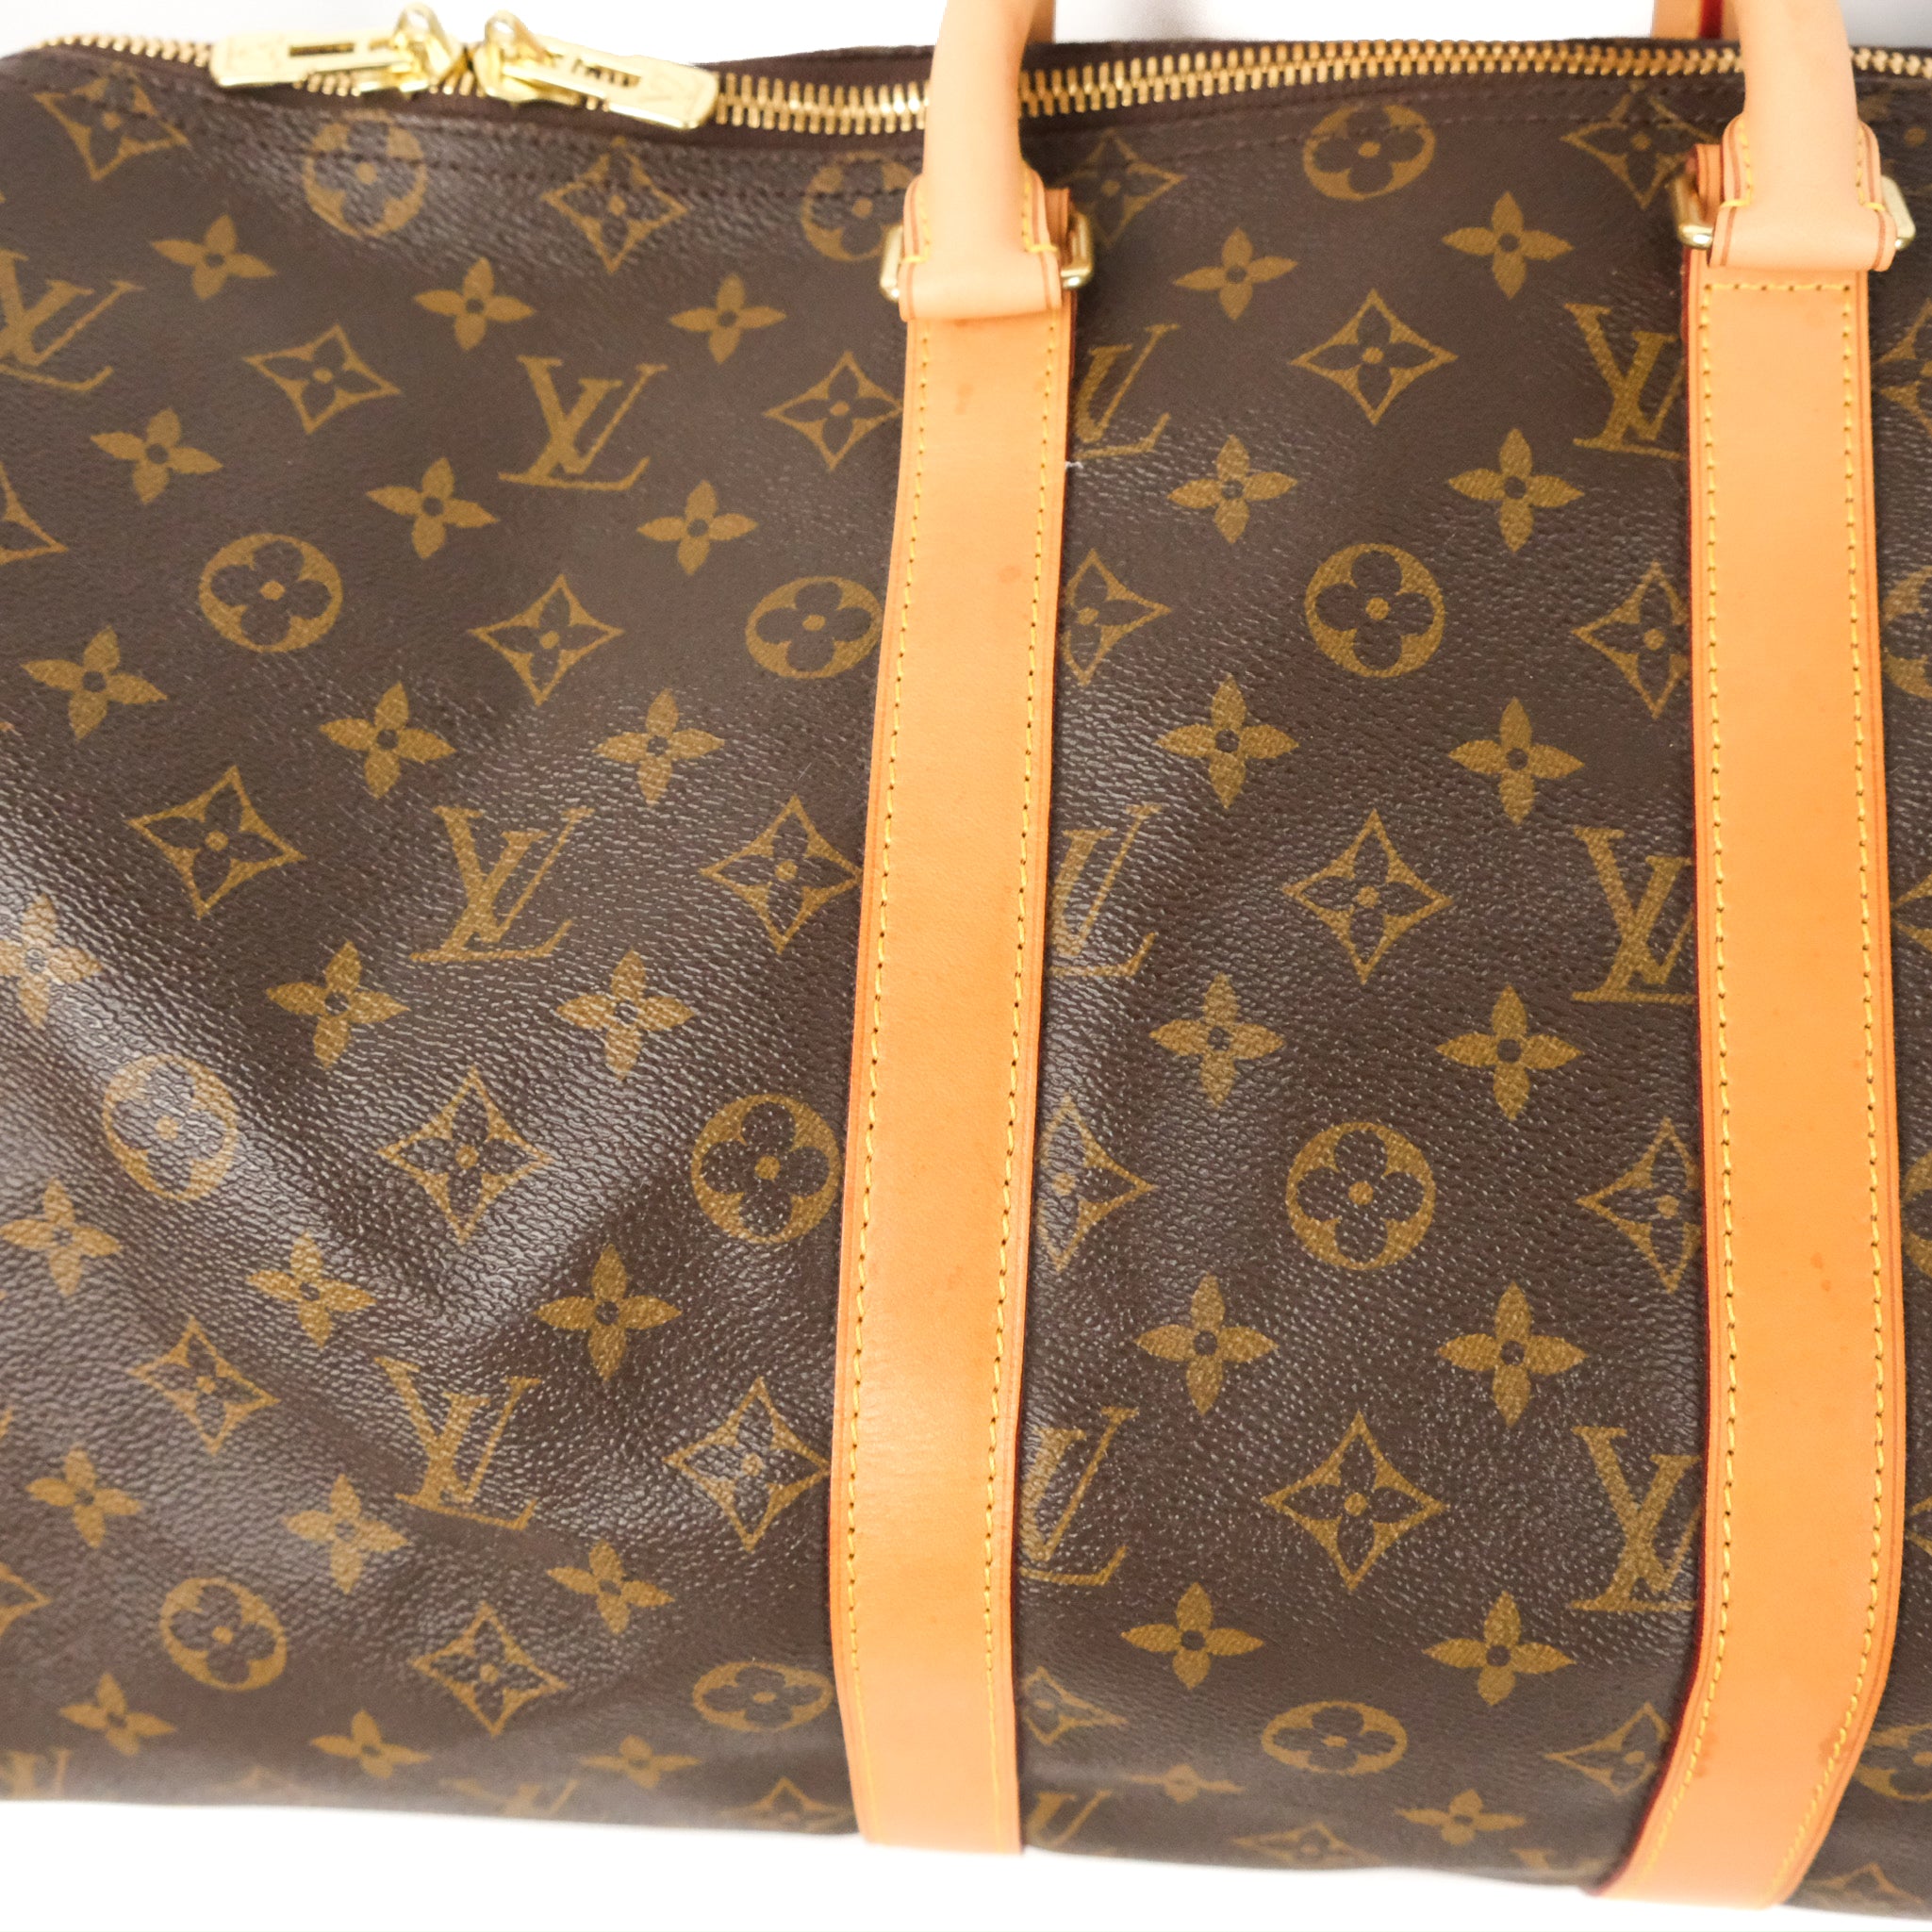 Sold at Auction: Louis Vuitton KEEPALL BANDOULIÈRE 55 Duffle Bag